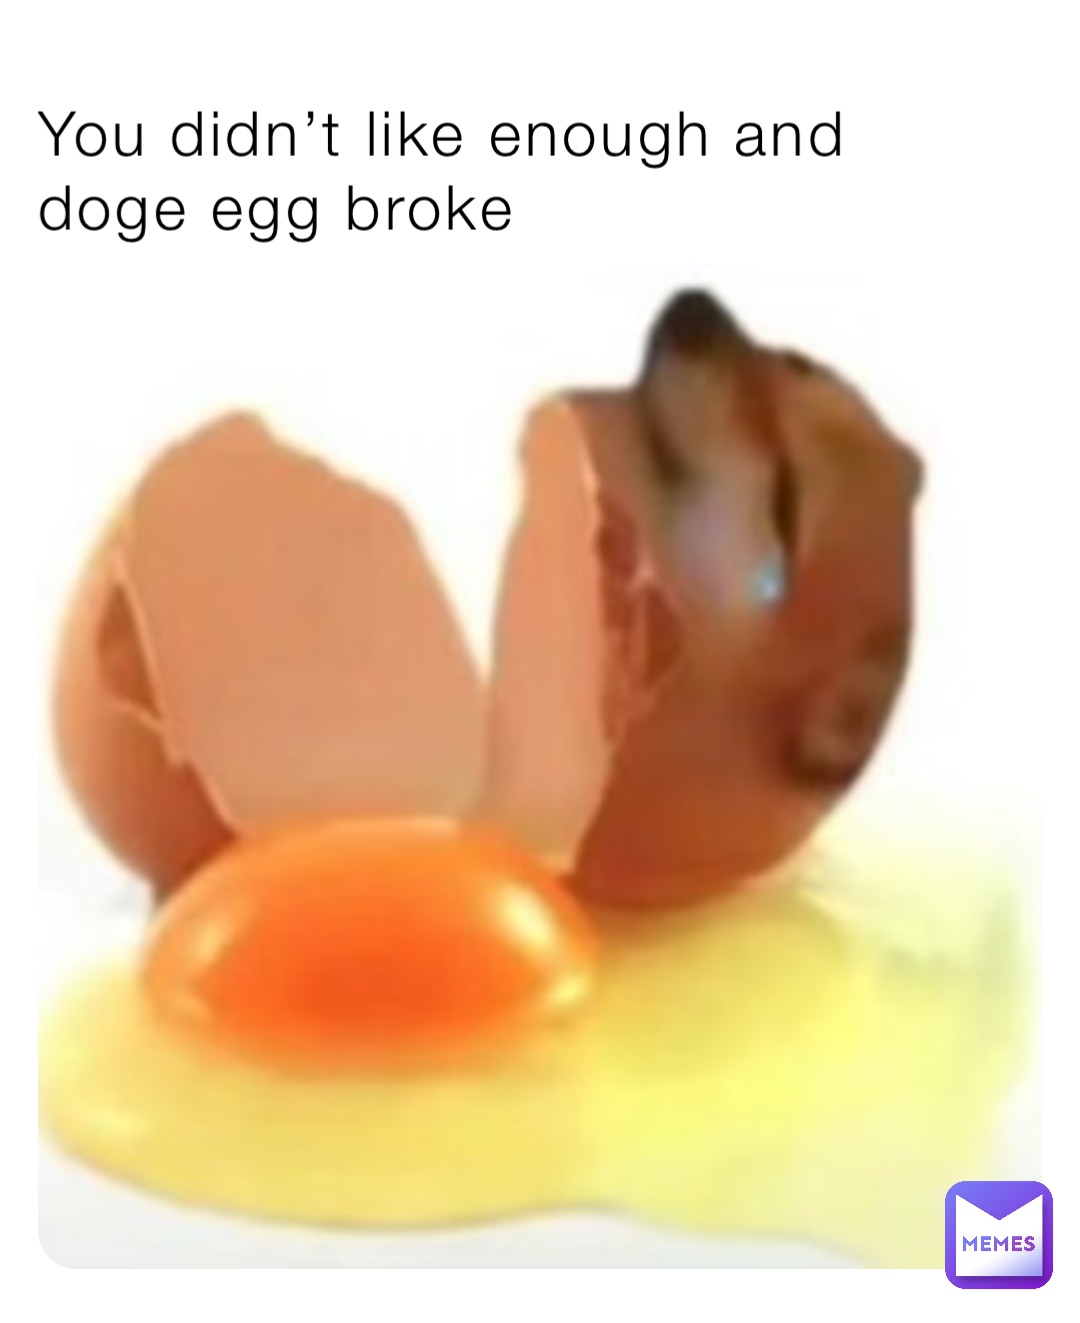 You didn’t like enough and doge egg broke